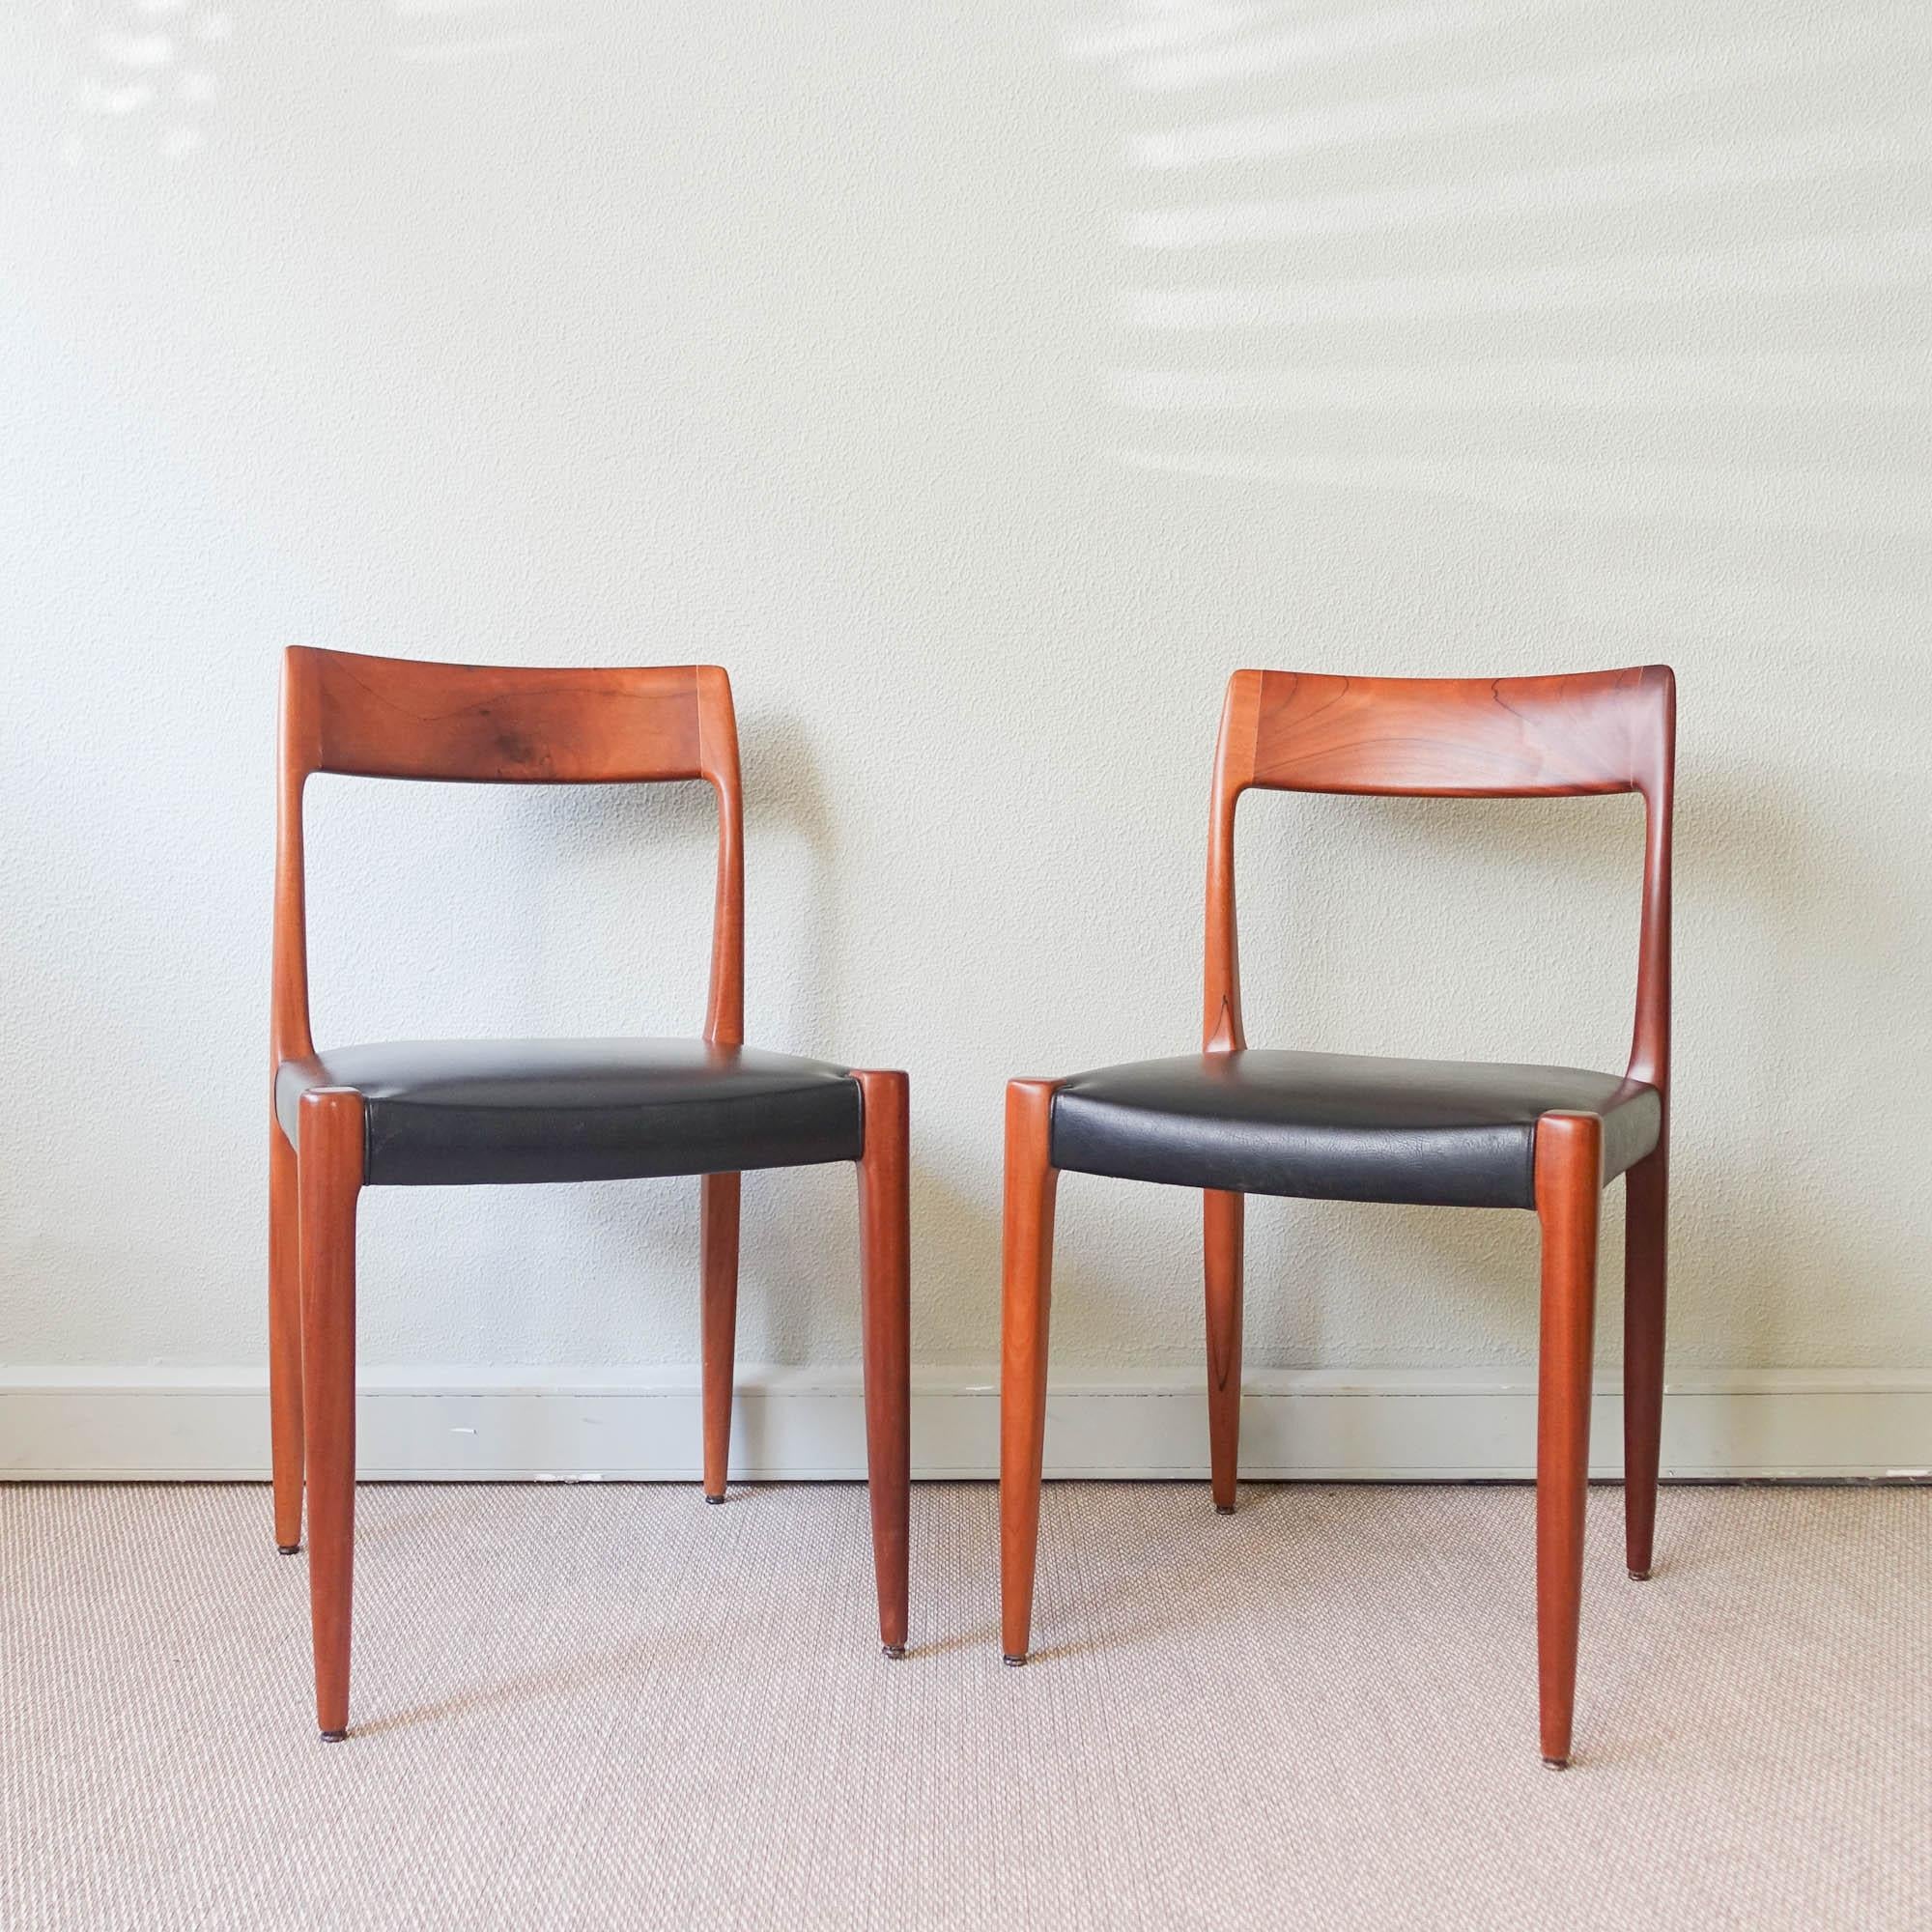 Portuguese Set of 4 Olaio Chairs Model Caravela by José Espinho, 1965